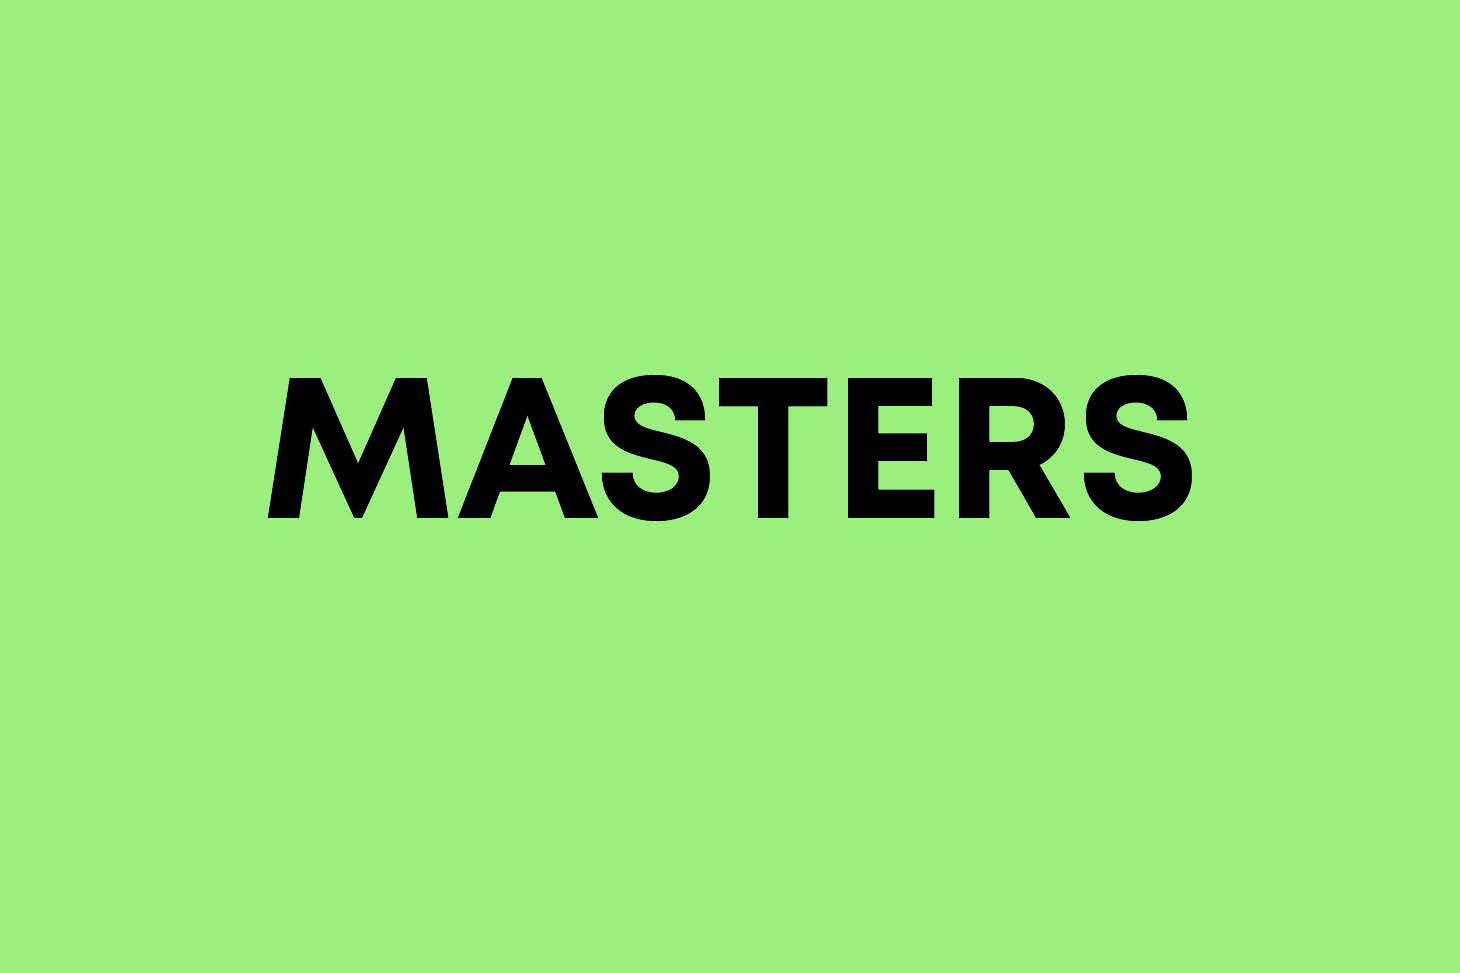 Masters ARSH